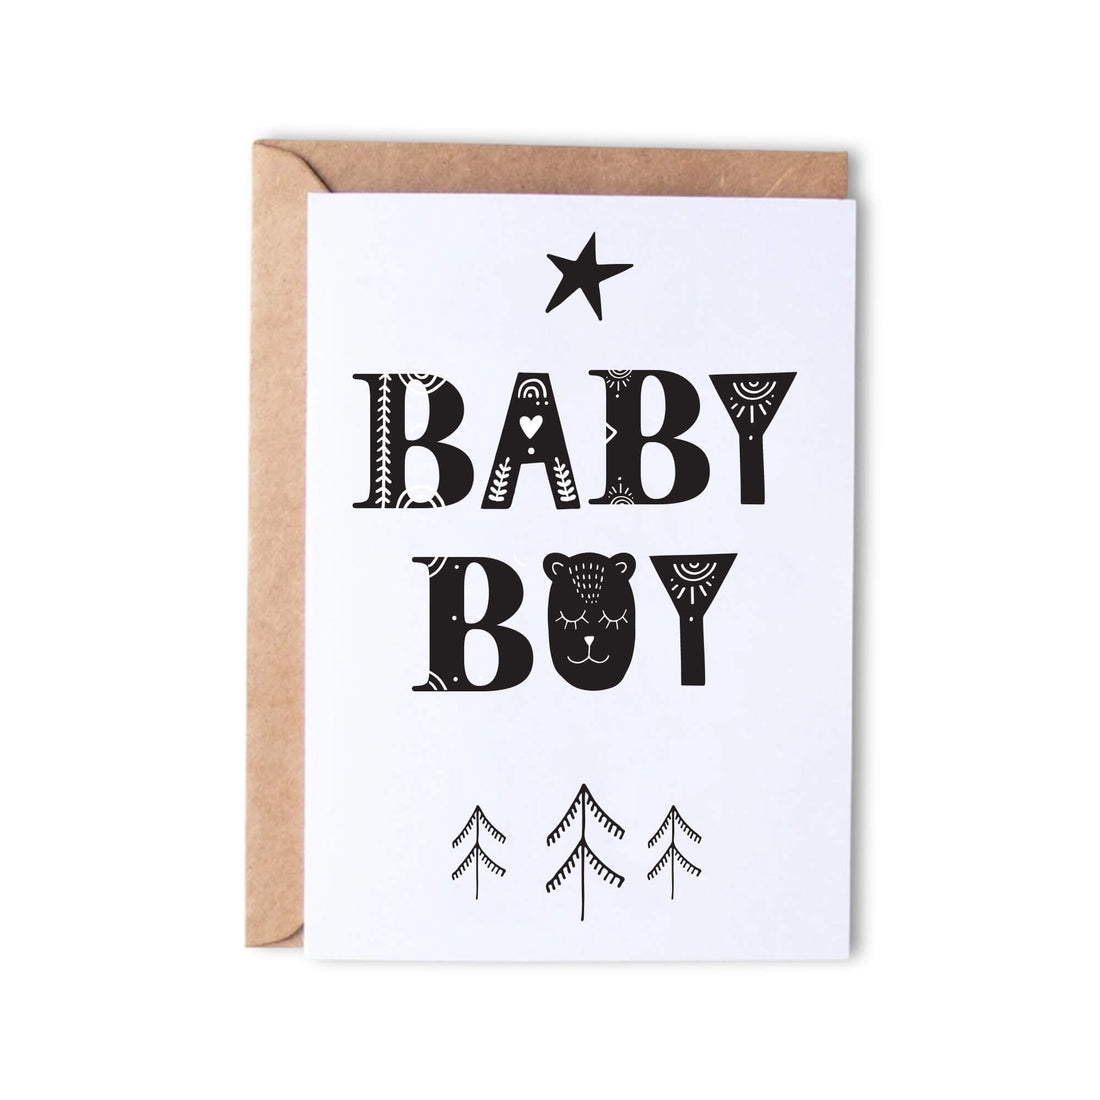 Baby bear boy - Monk Designs